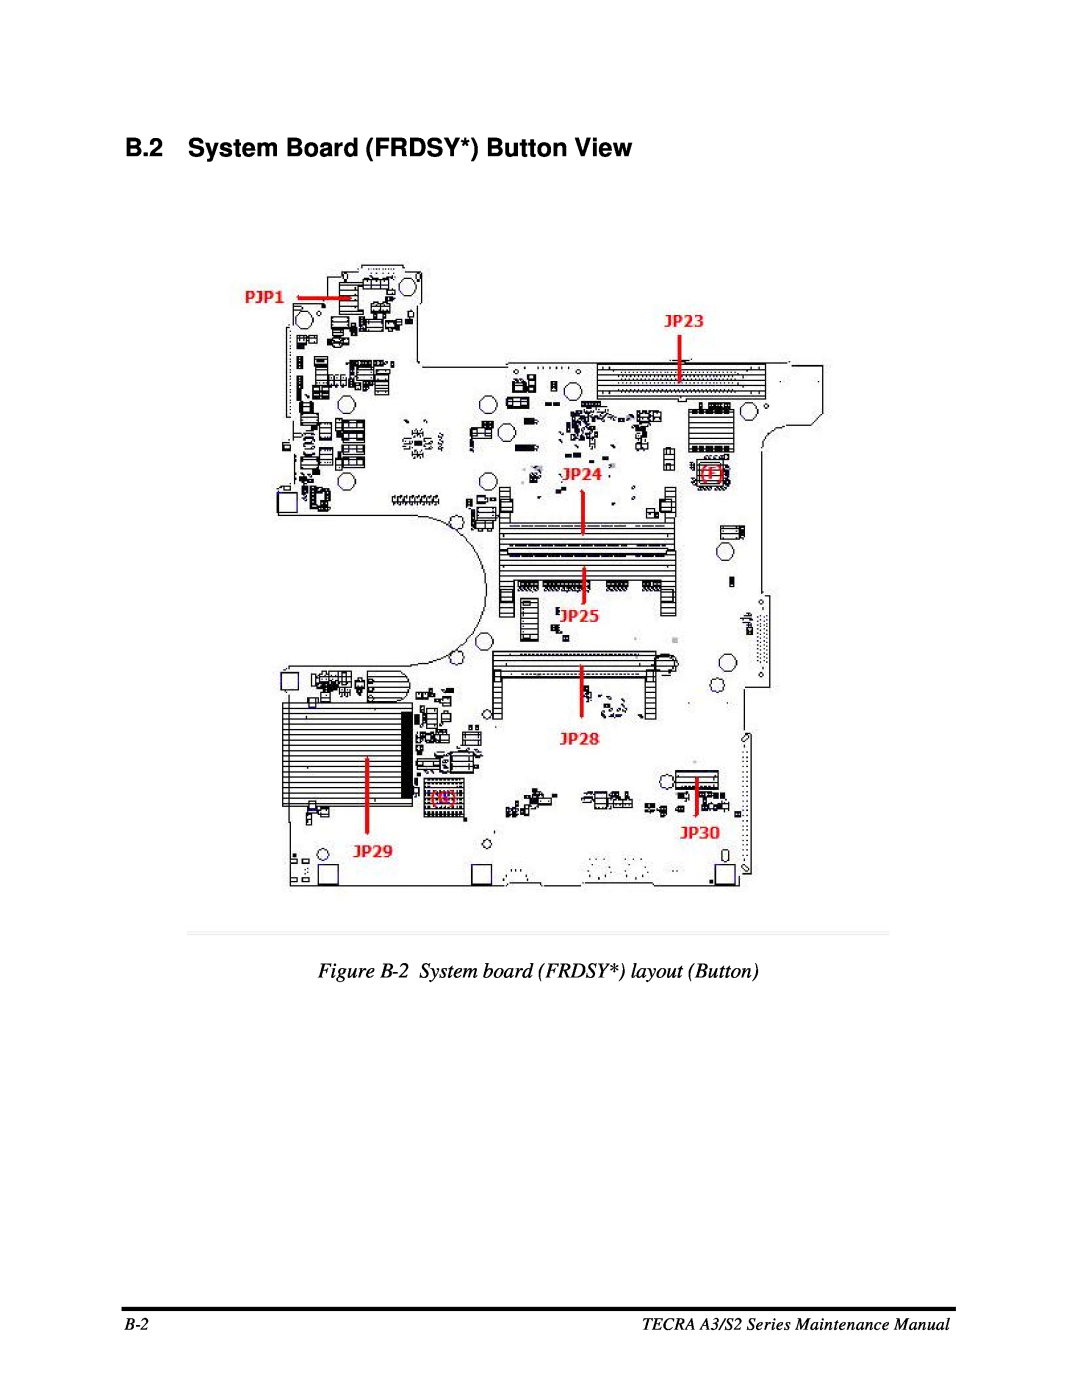 Toshiba S2 manual B.2 System Board FRDSY* Button View, Figure B-2 System board FRDSY* layout Button 